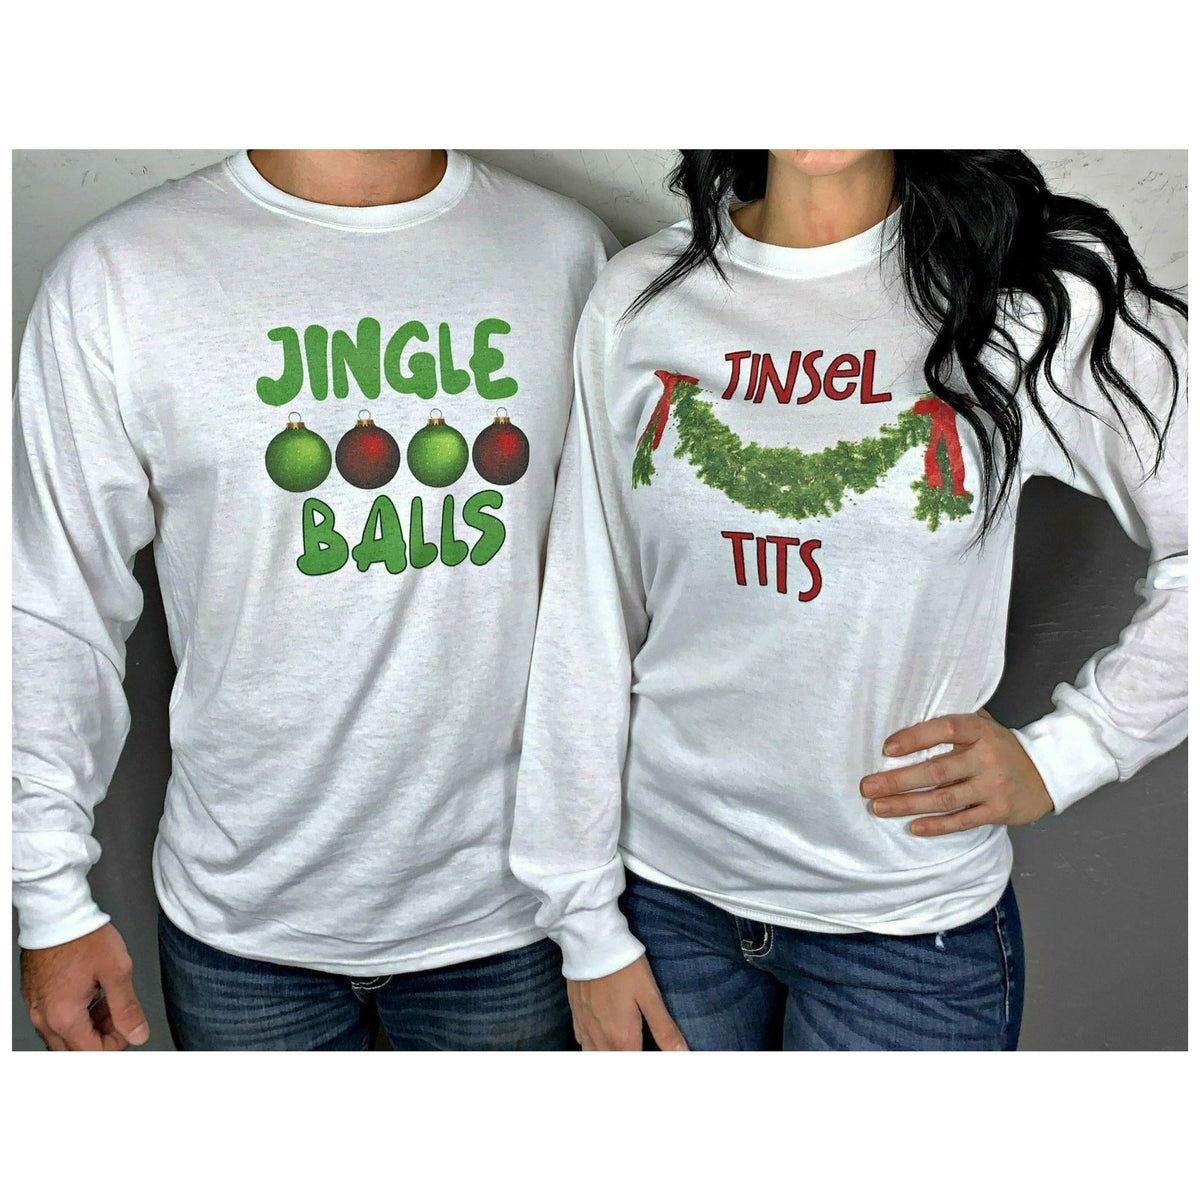 tinsel Tits &amp; Jingle Balls tee (sold separately)